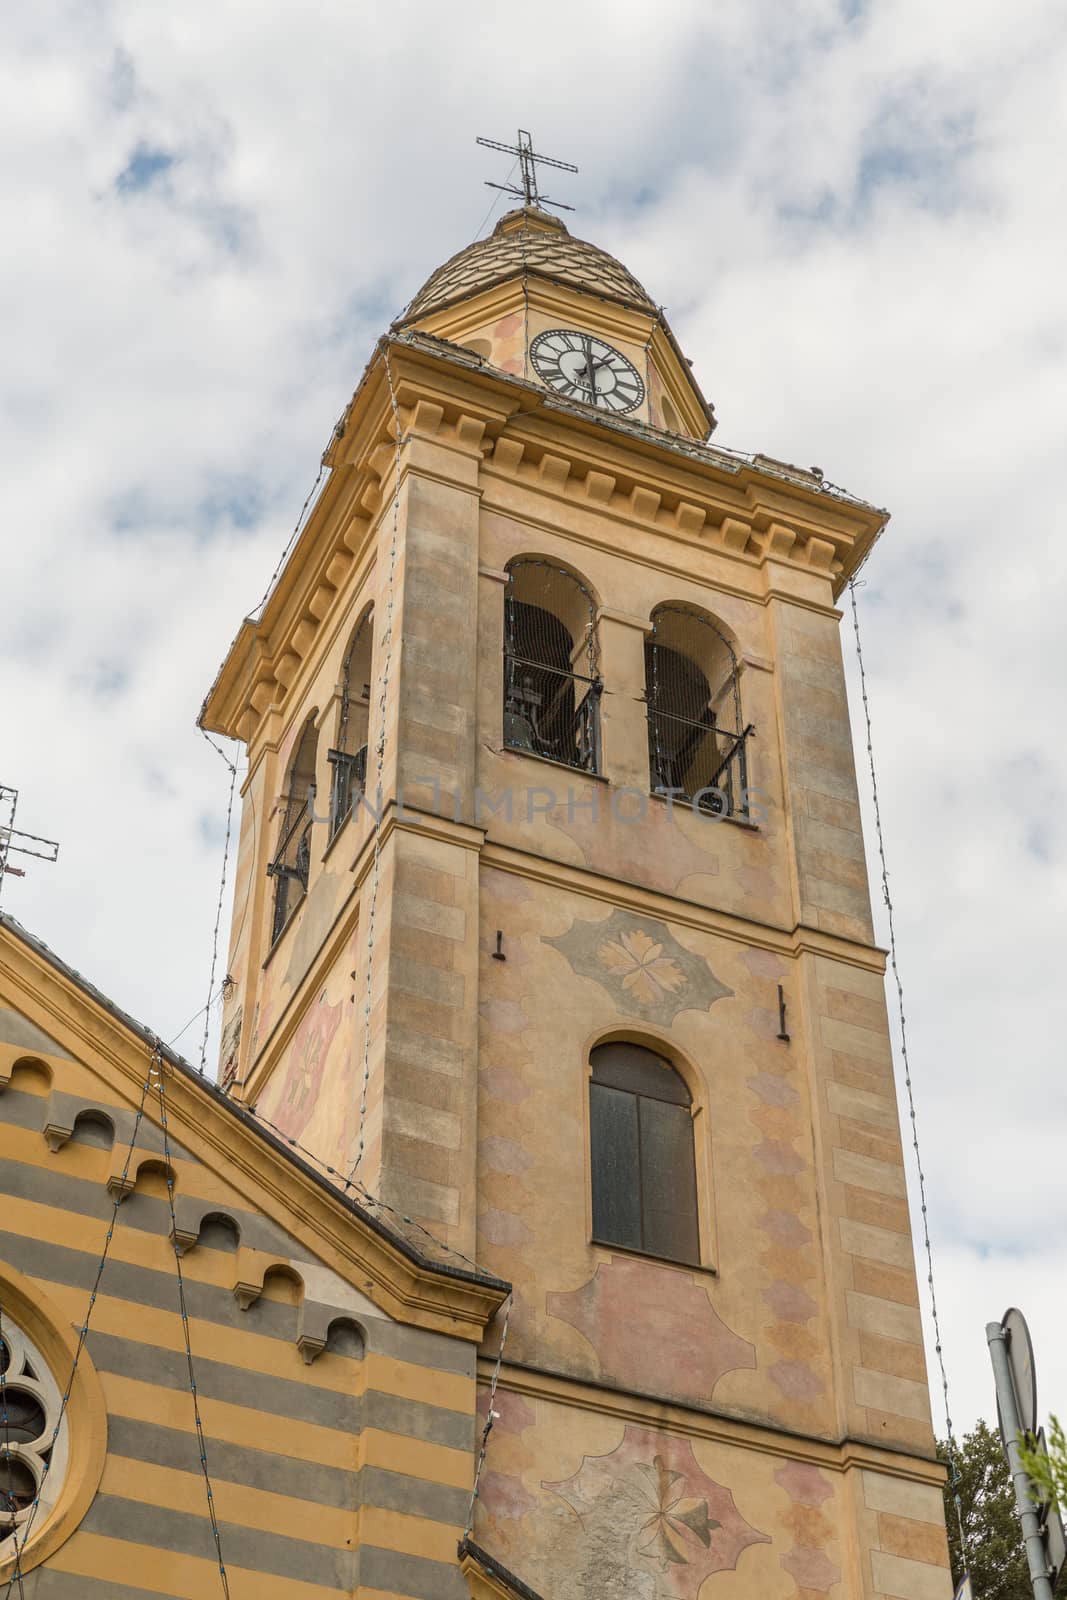 Church Tower in Portofino in Italy near Santa Margherita Ligure